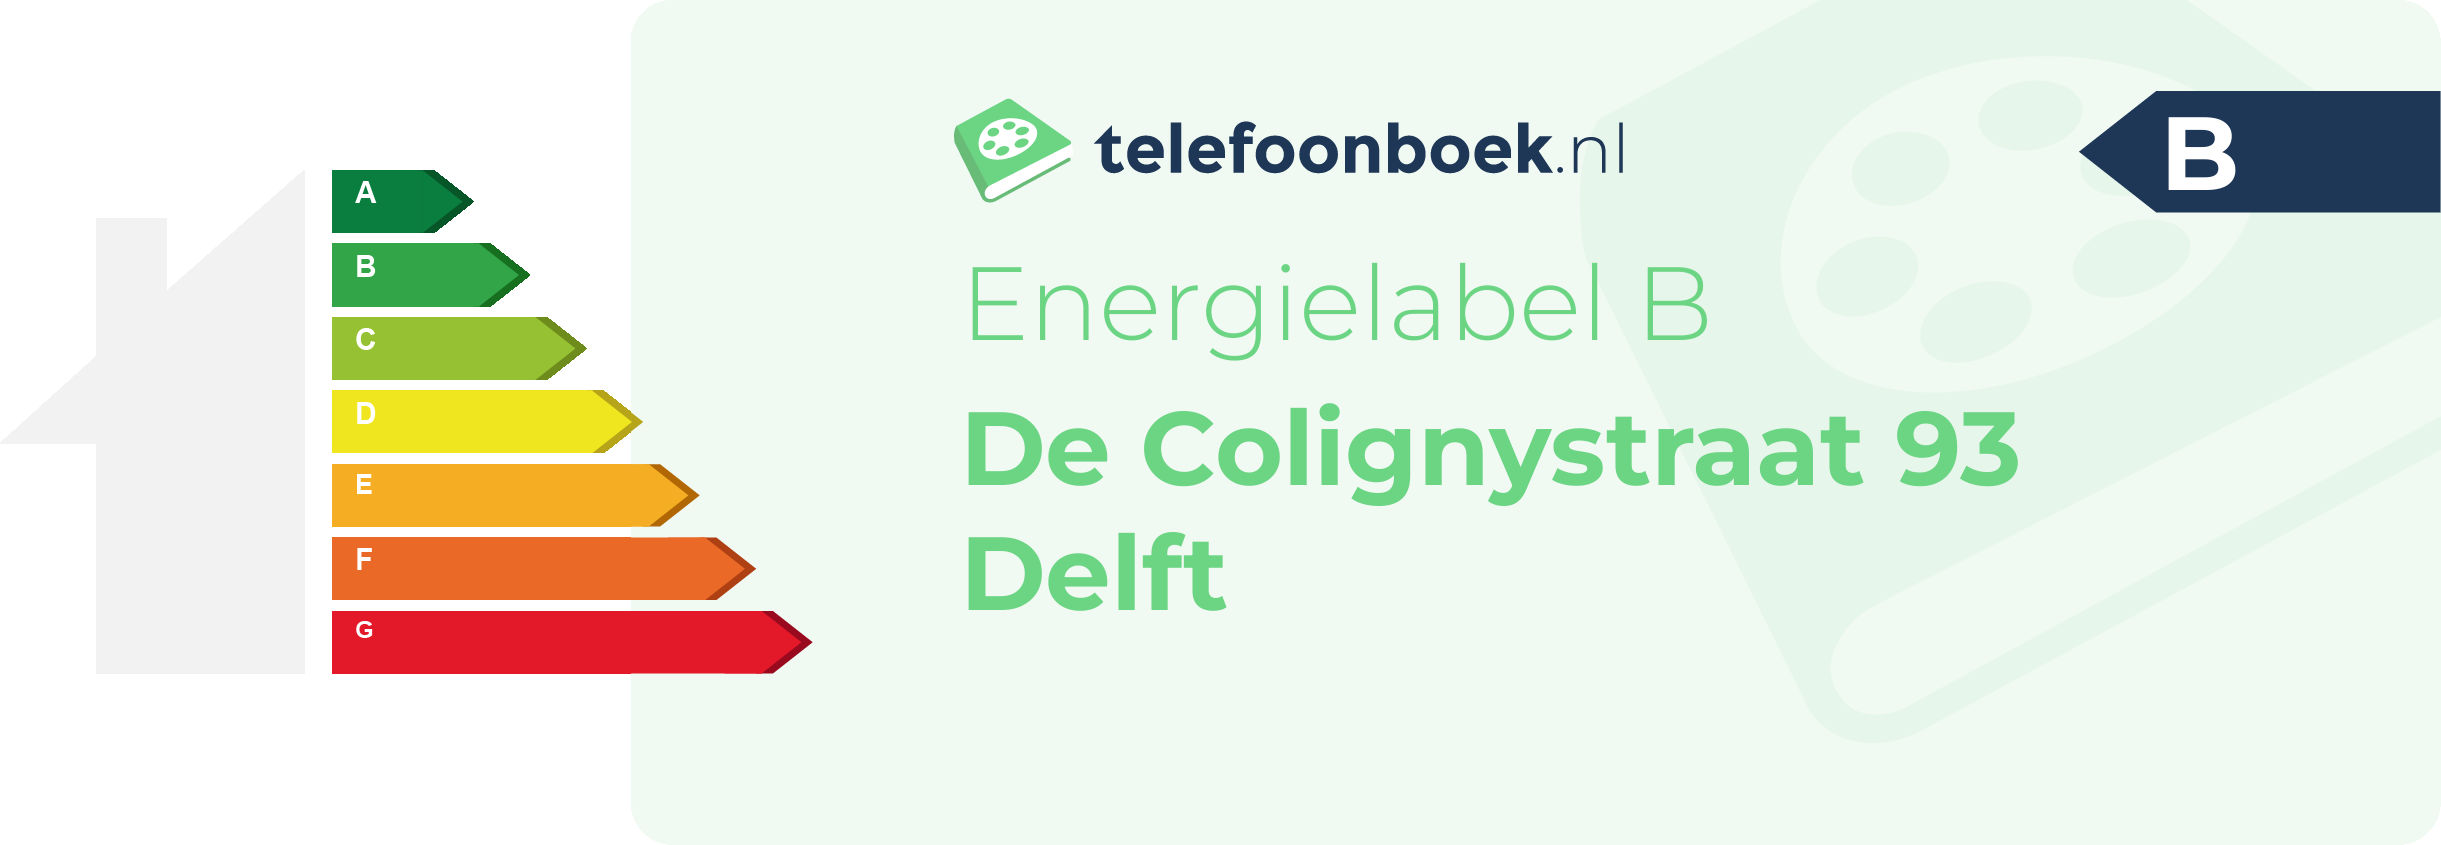 Energielabel De Colignystraat 93 Delft